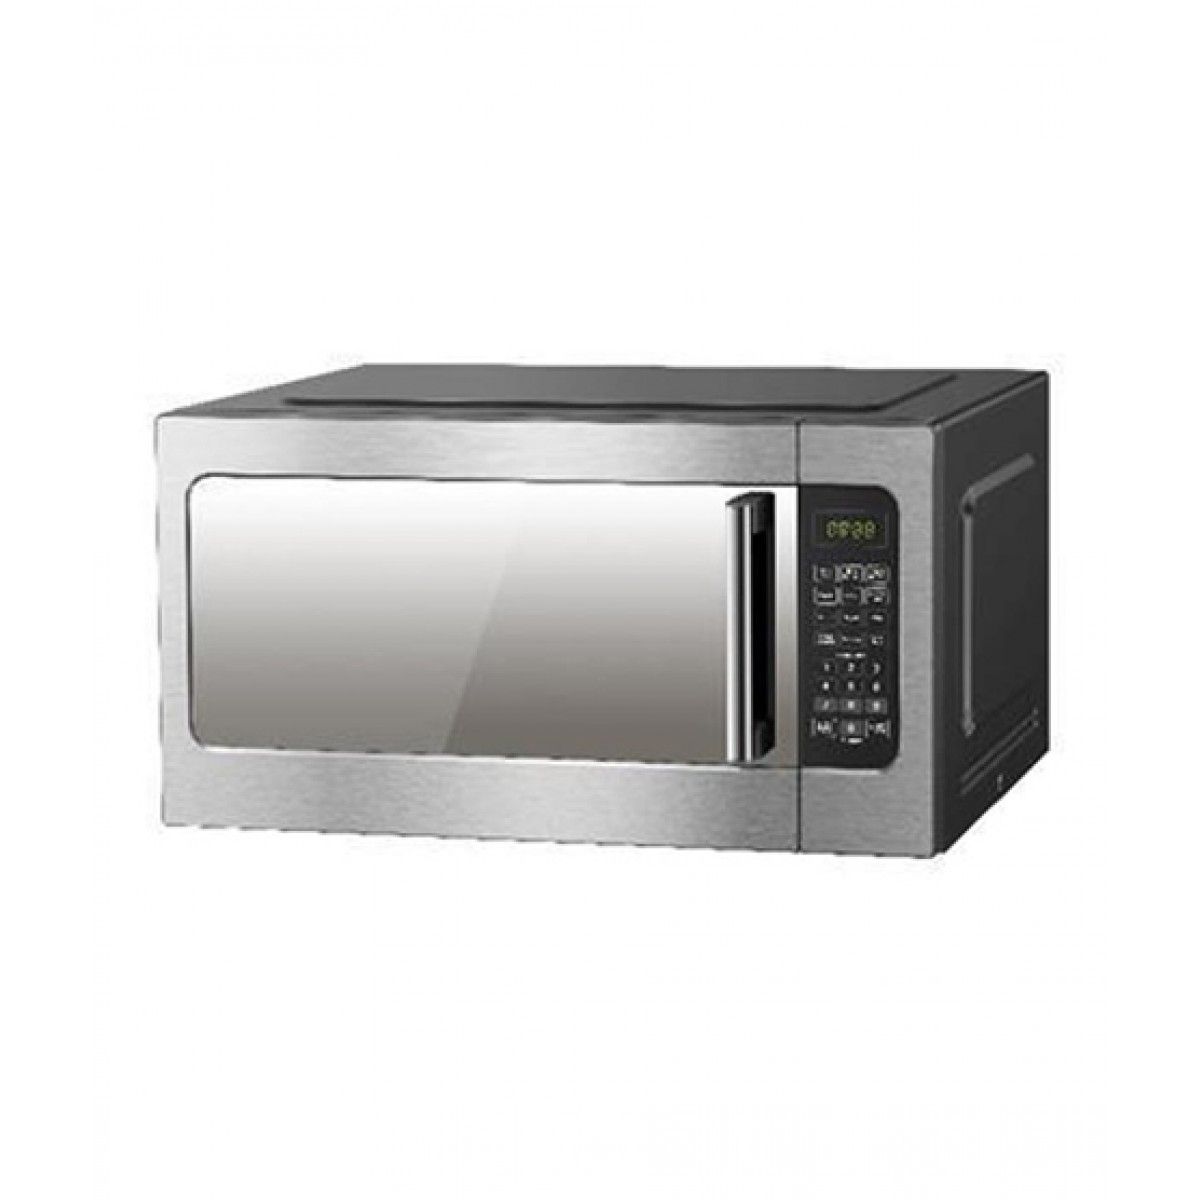 Orient Steak Solo Microwave Oven 62 Ltr